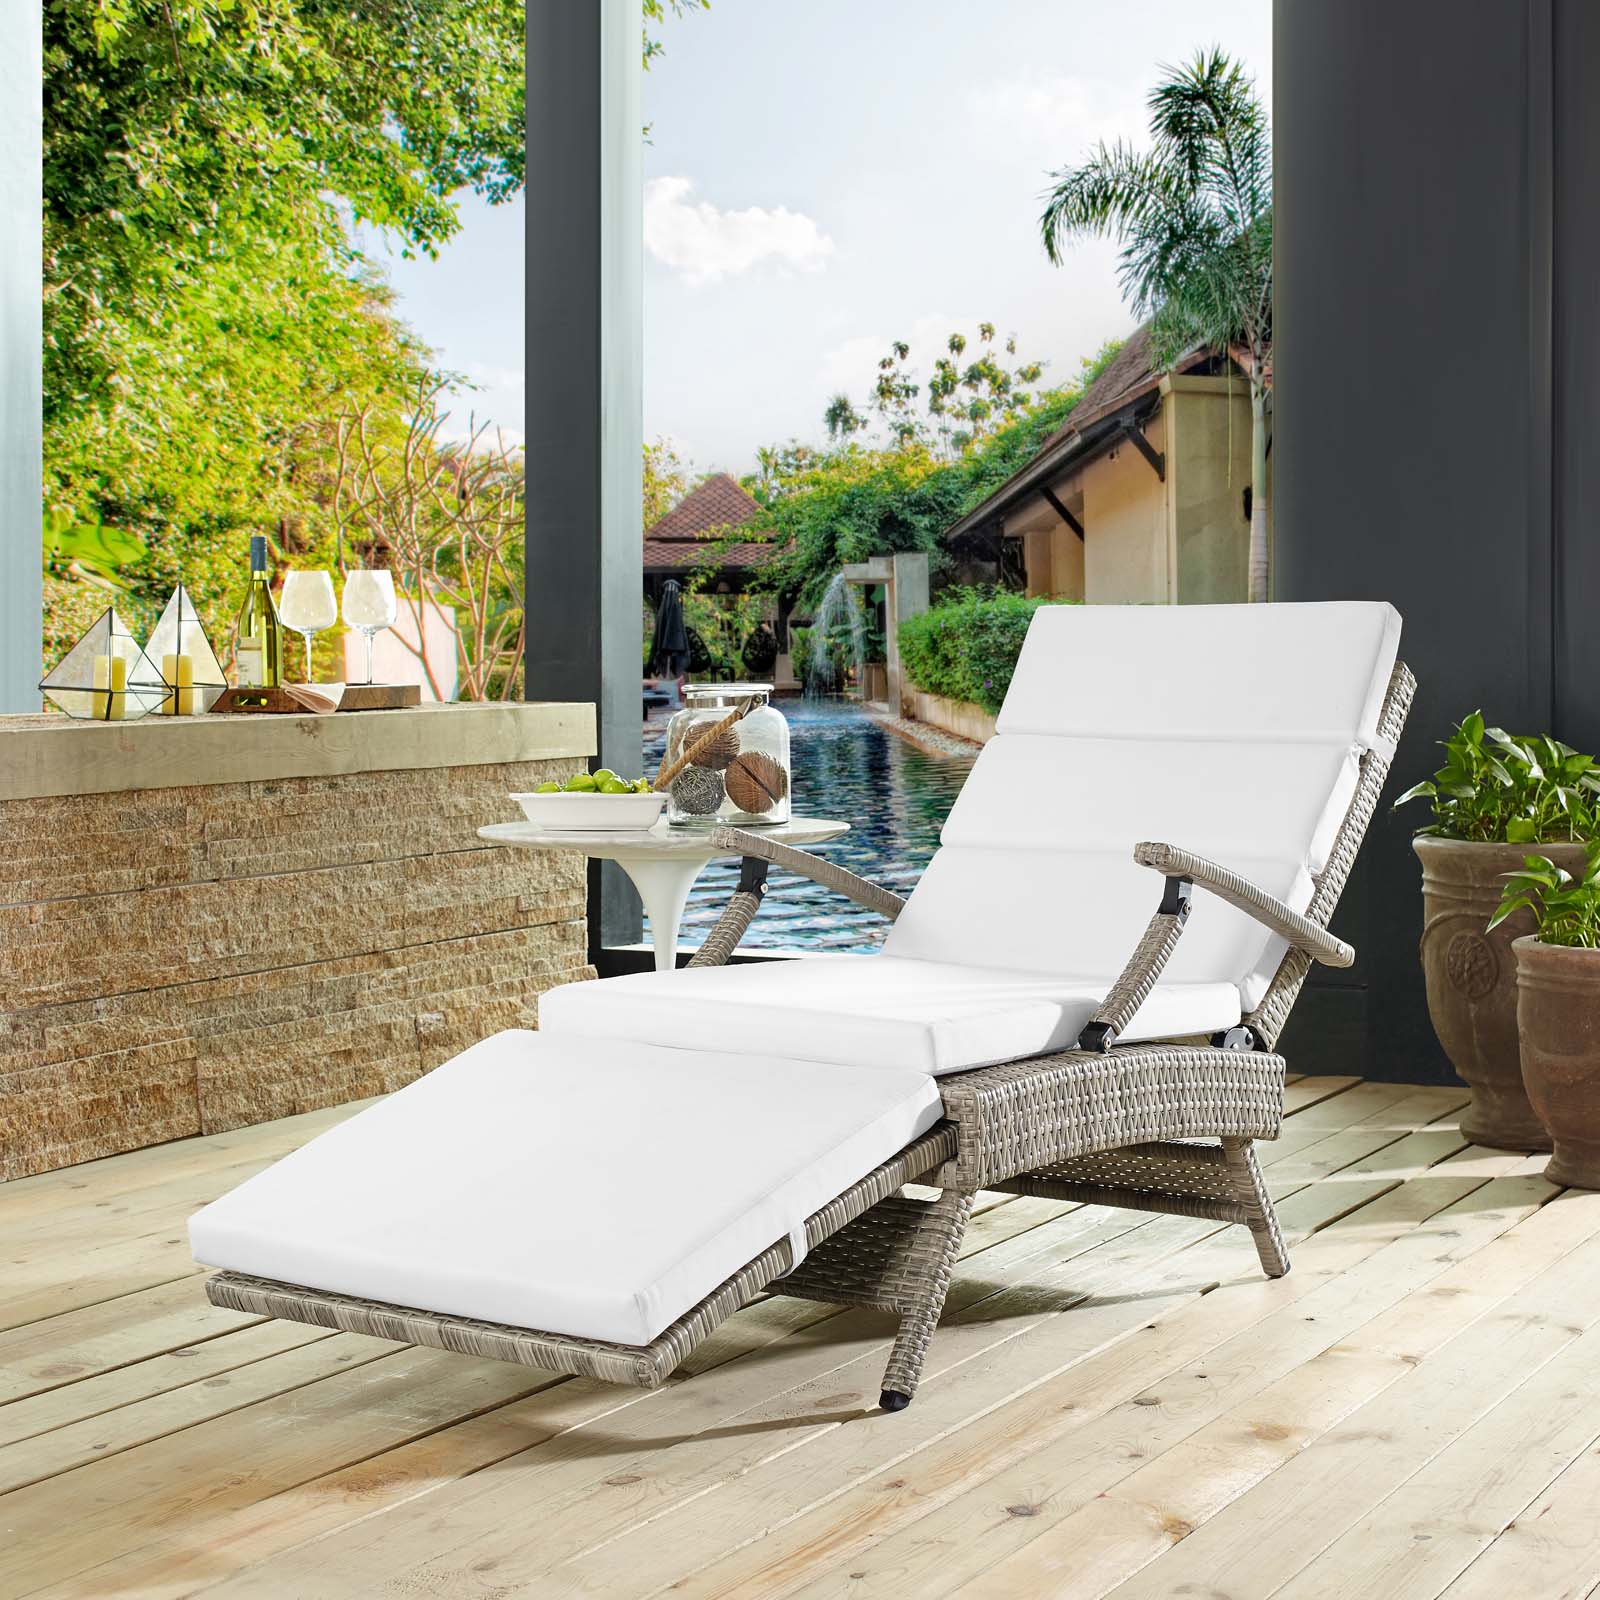 Contemporary Modern Urban Designer Outdoor Patio Balcony Garden Furniture Lounge Chair Chaise, Fabric Rattan Wicker, White - image 2 of 9